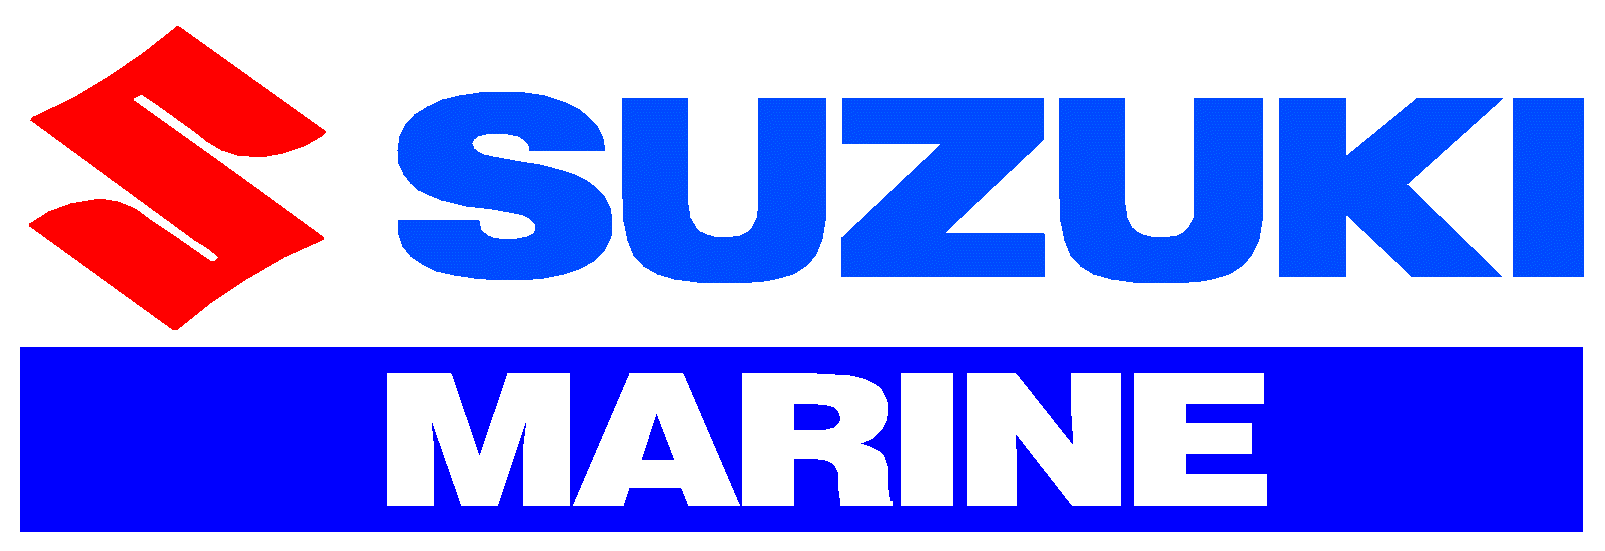 http://www.heartsmarine.com/suzuki-marine-logo.gif